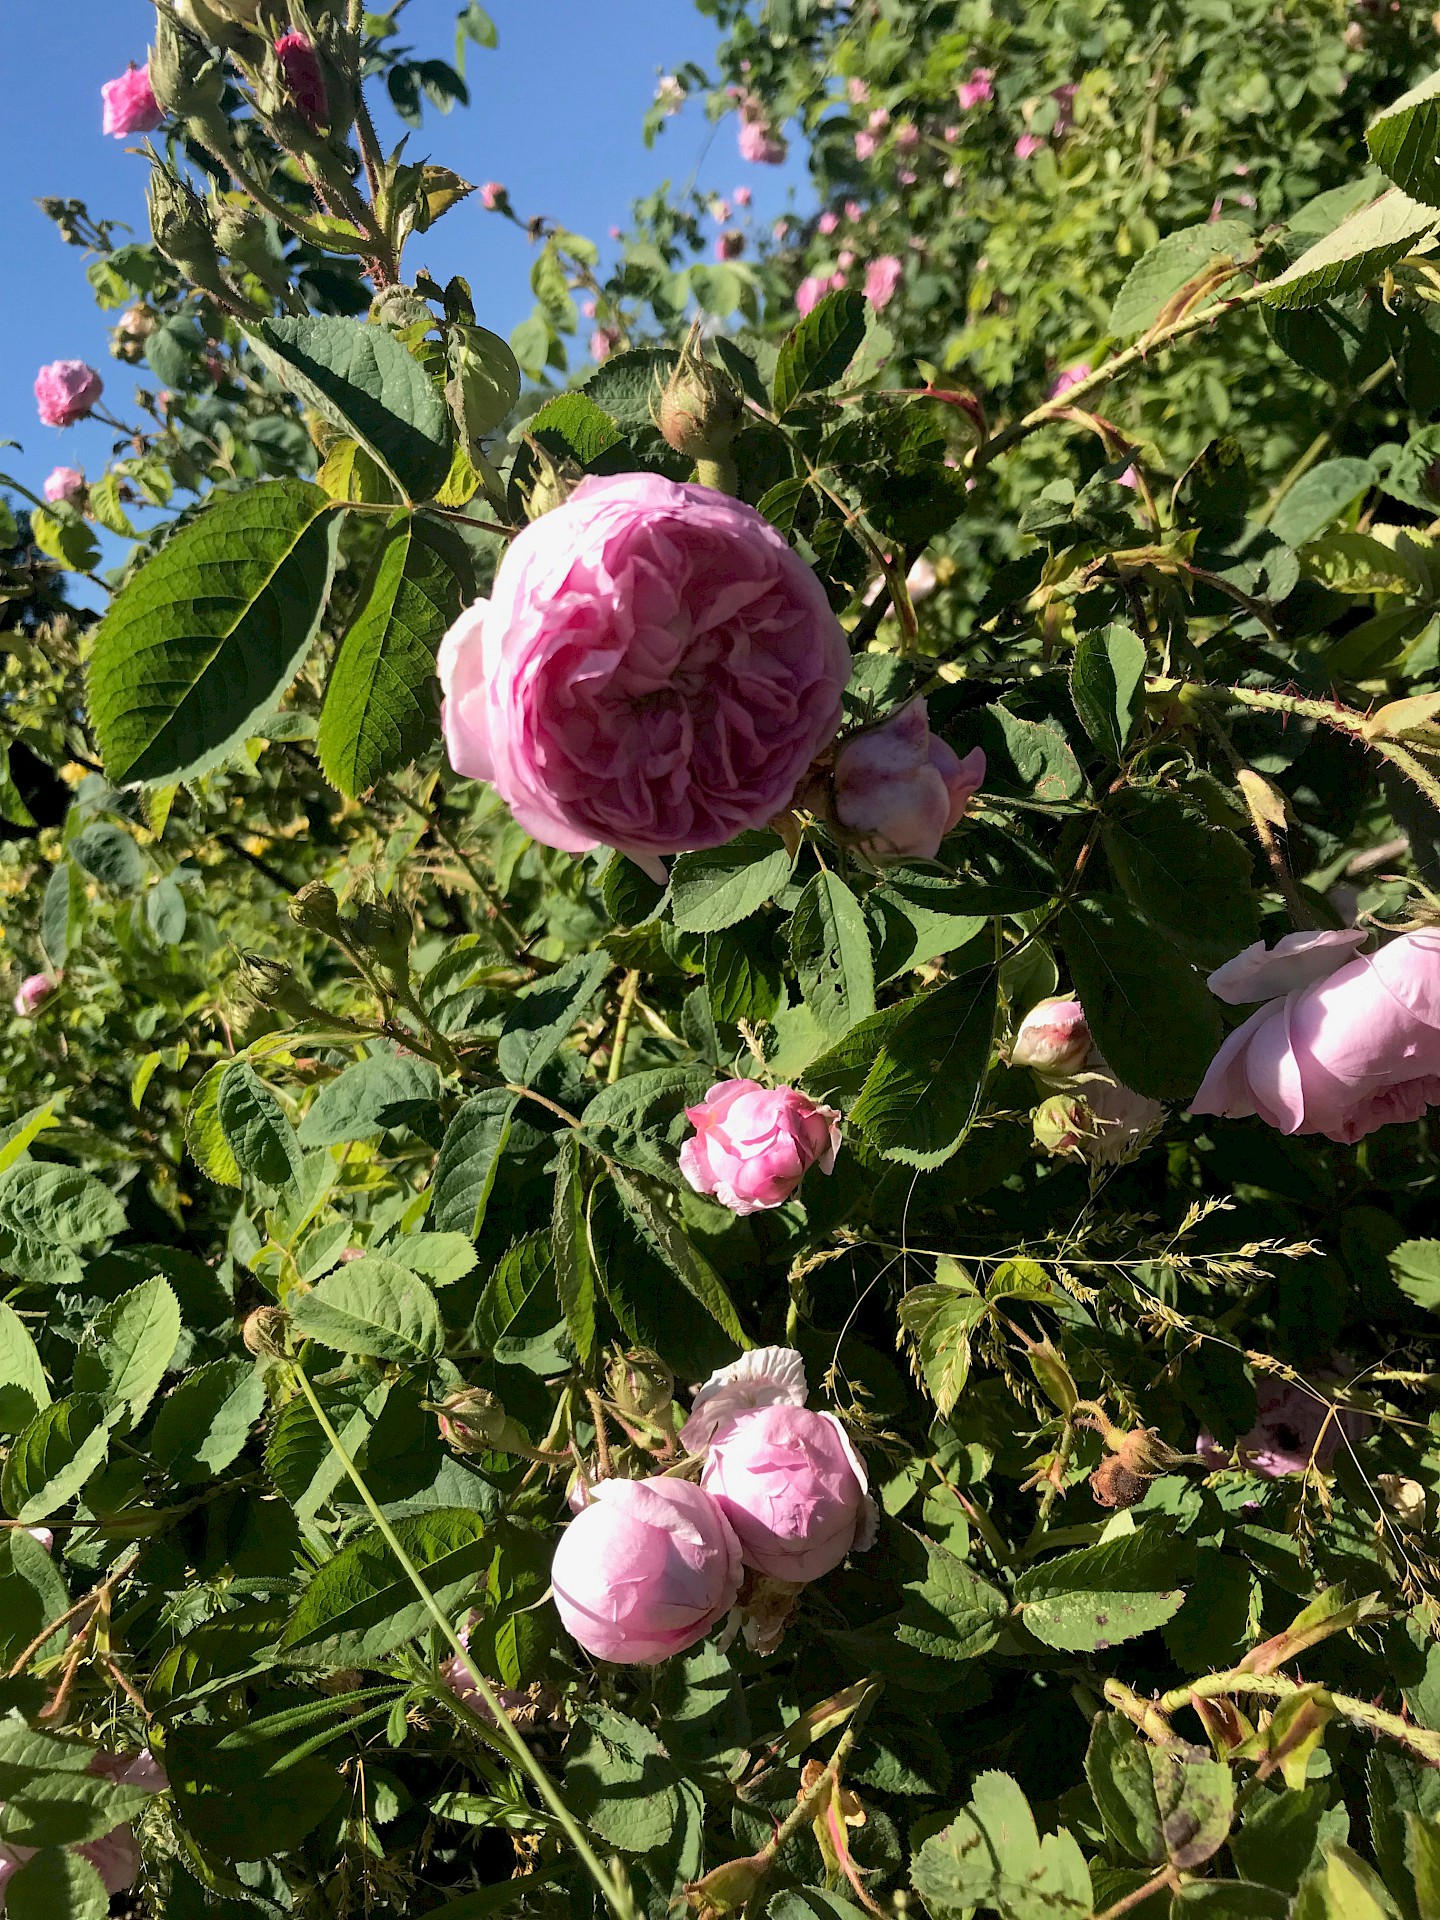 Damascus rose flowers